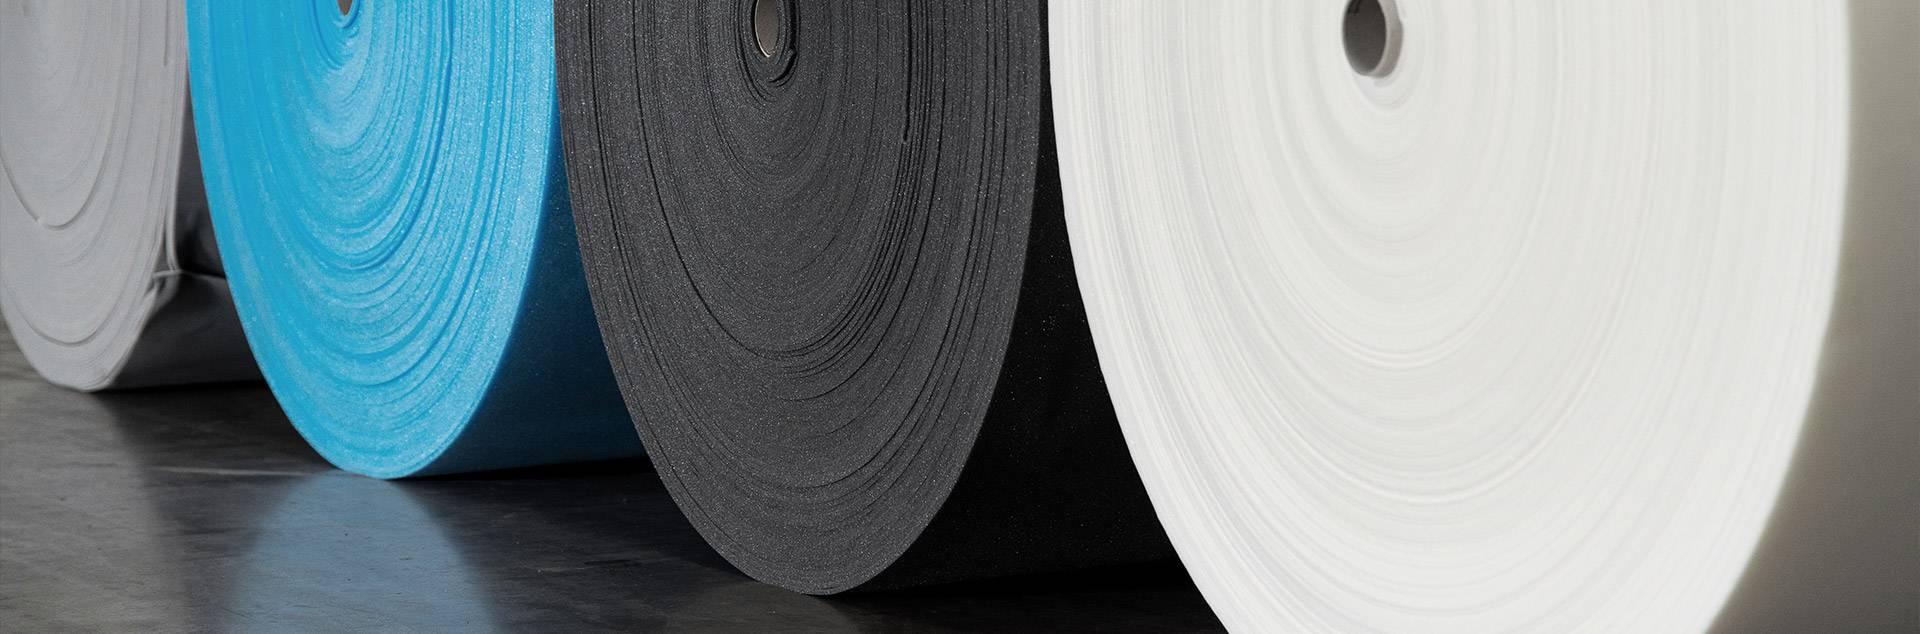 Thin solid rubber sheet roll - Tianjin China Rubber